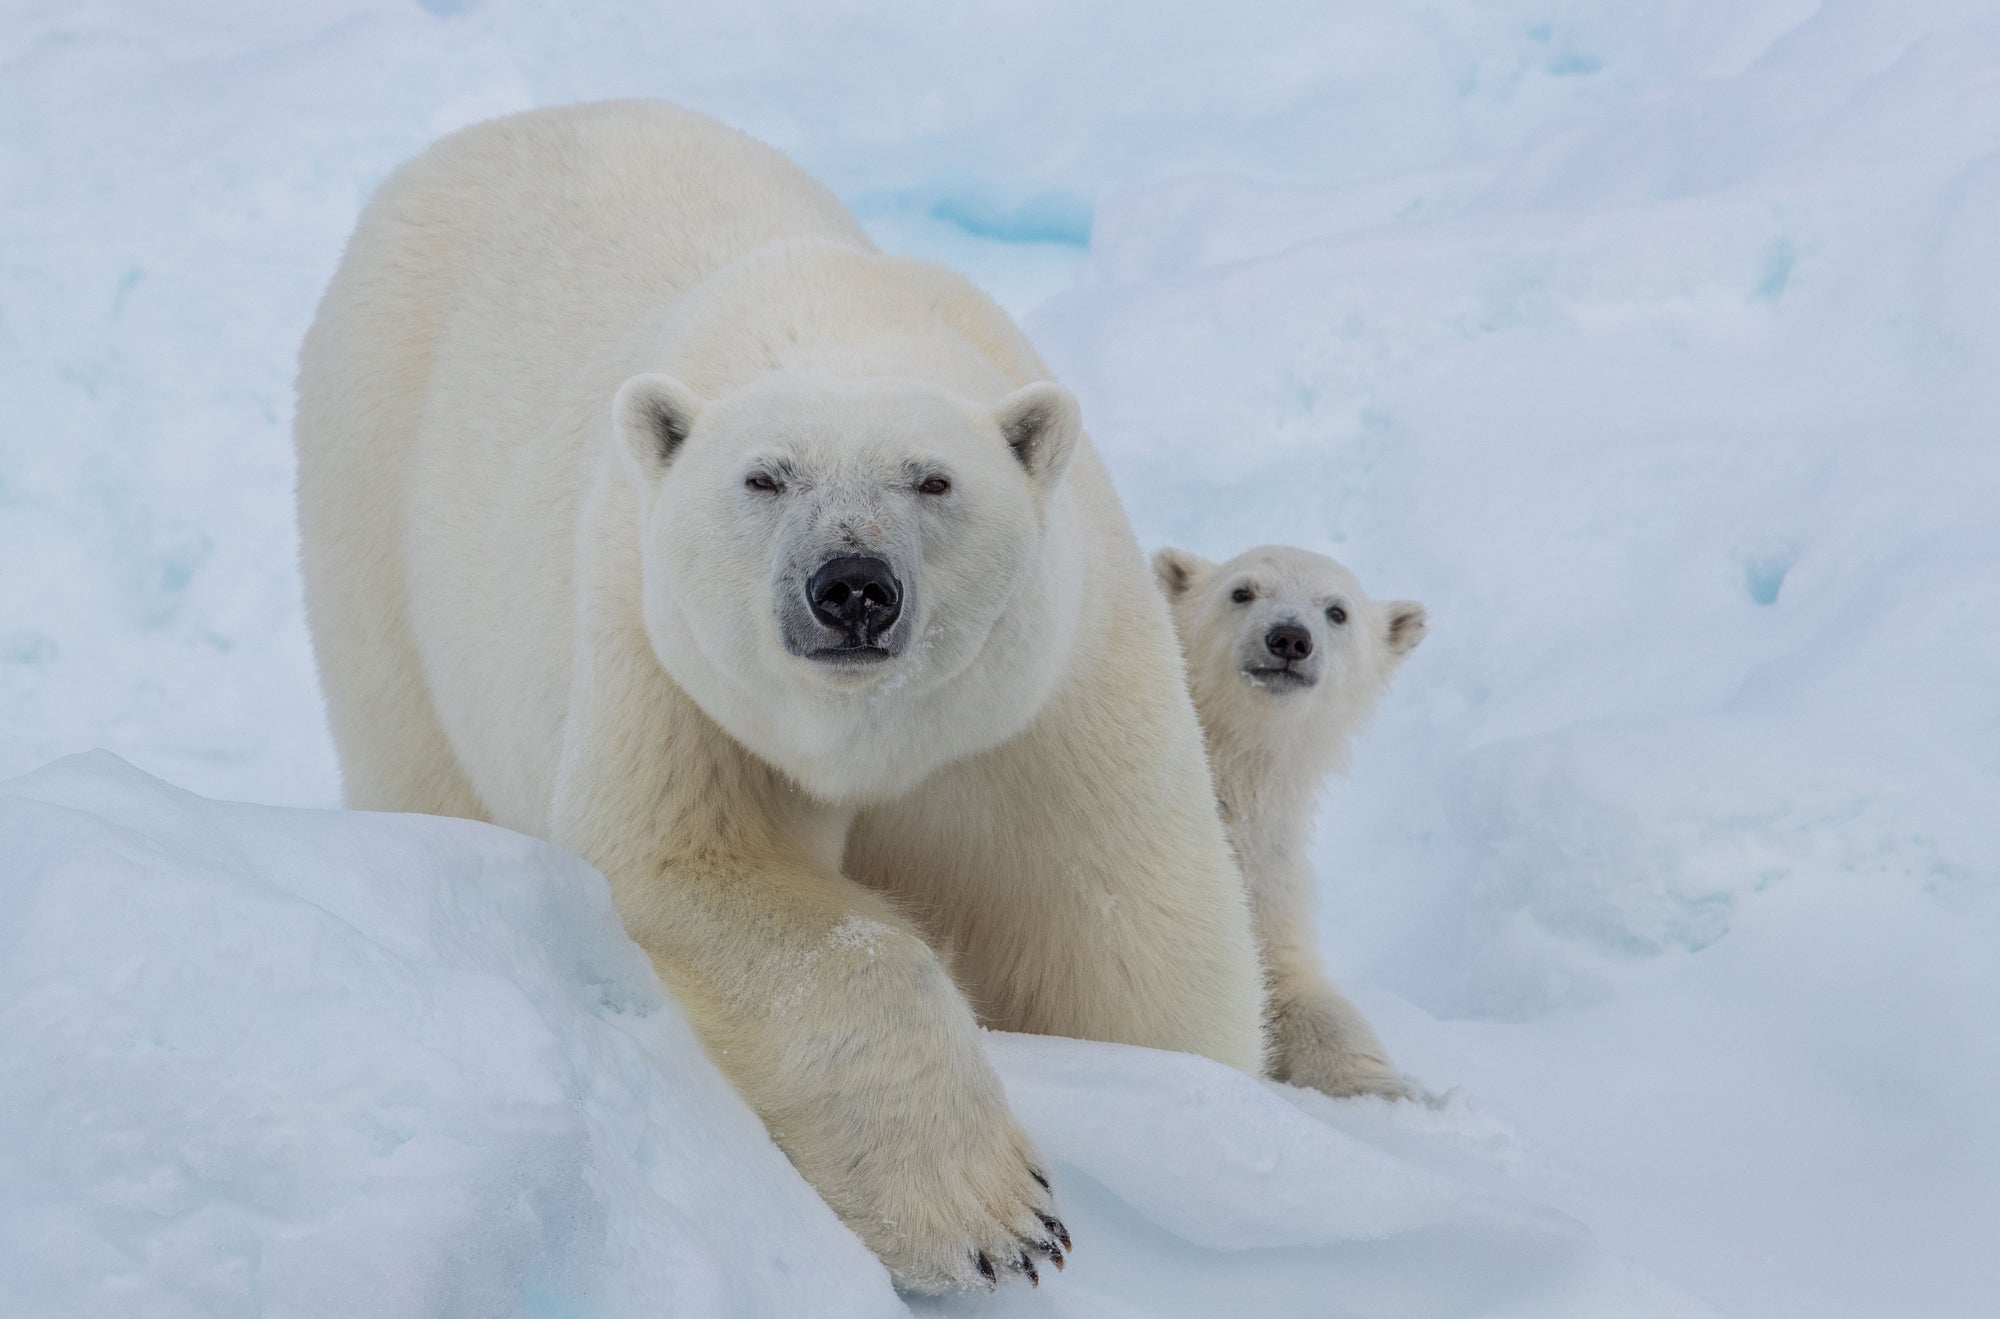 Polar bears, photo by Lianna Nixon